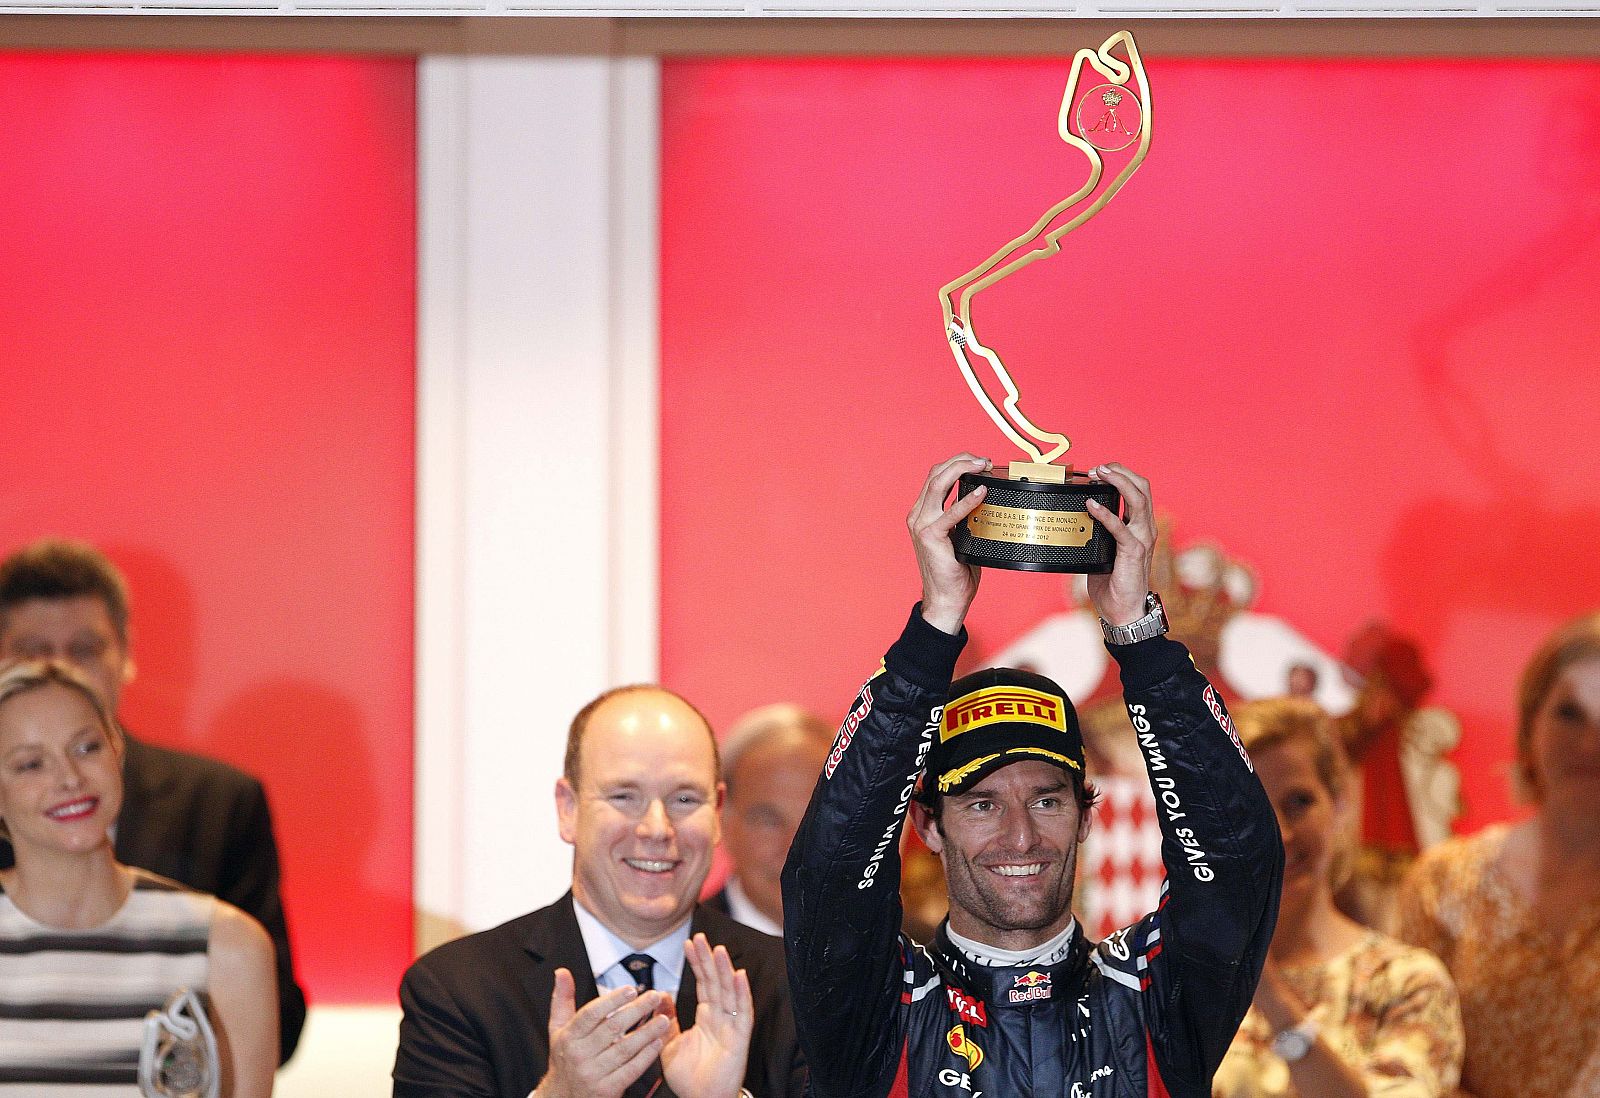 Red Bull Formula One driver Webber of Australia celebrates on the podium after winning the Monaco F1 Grand Prix